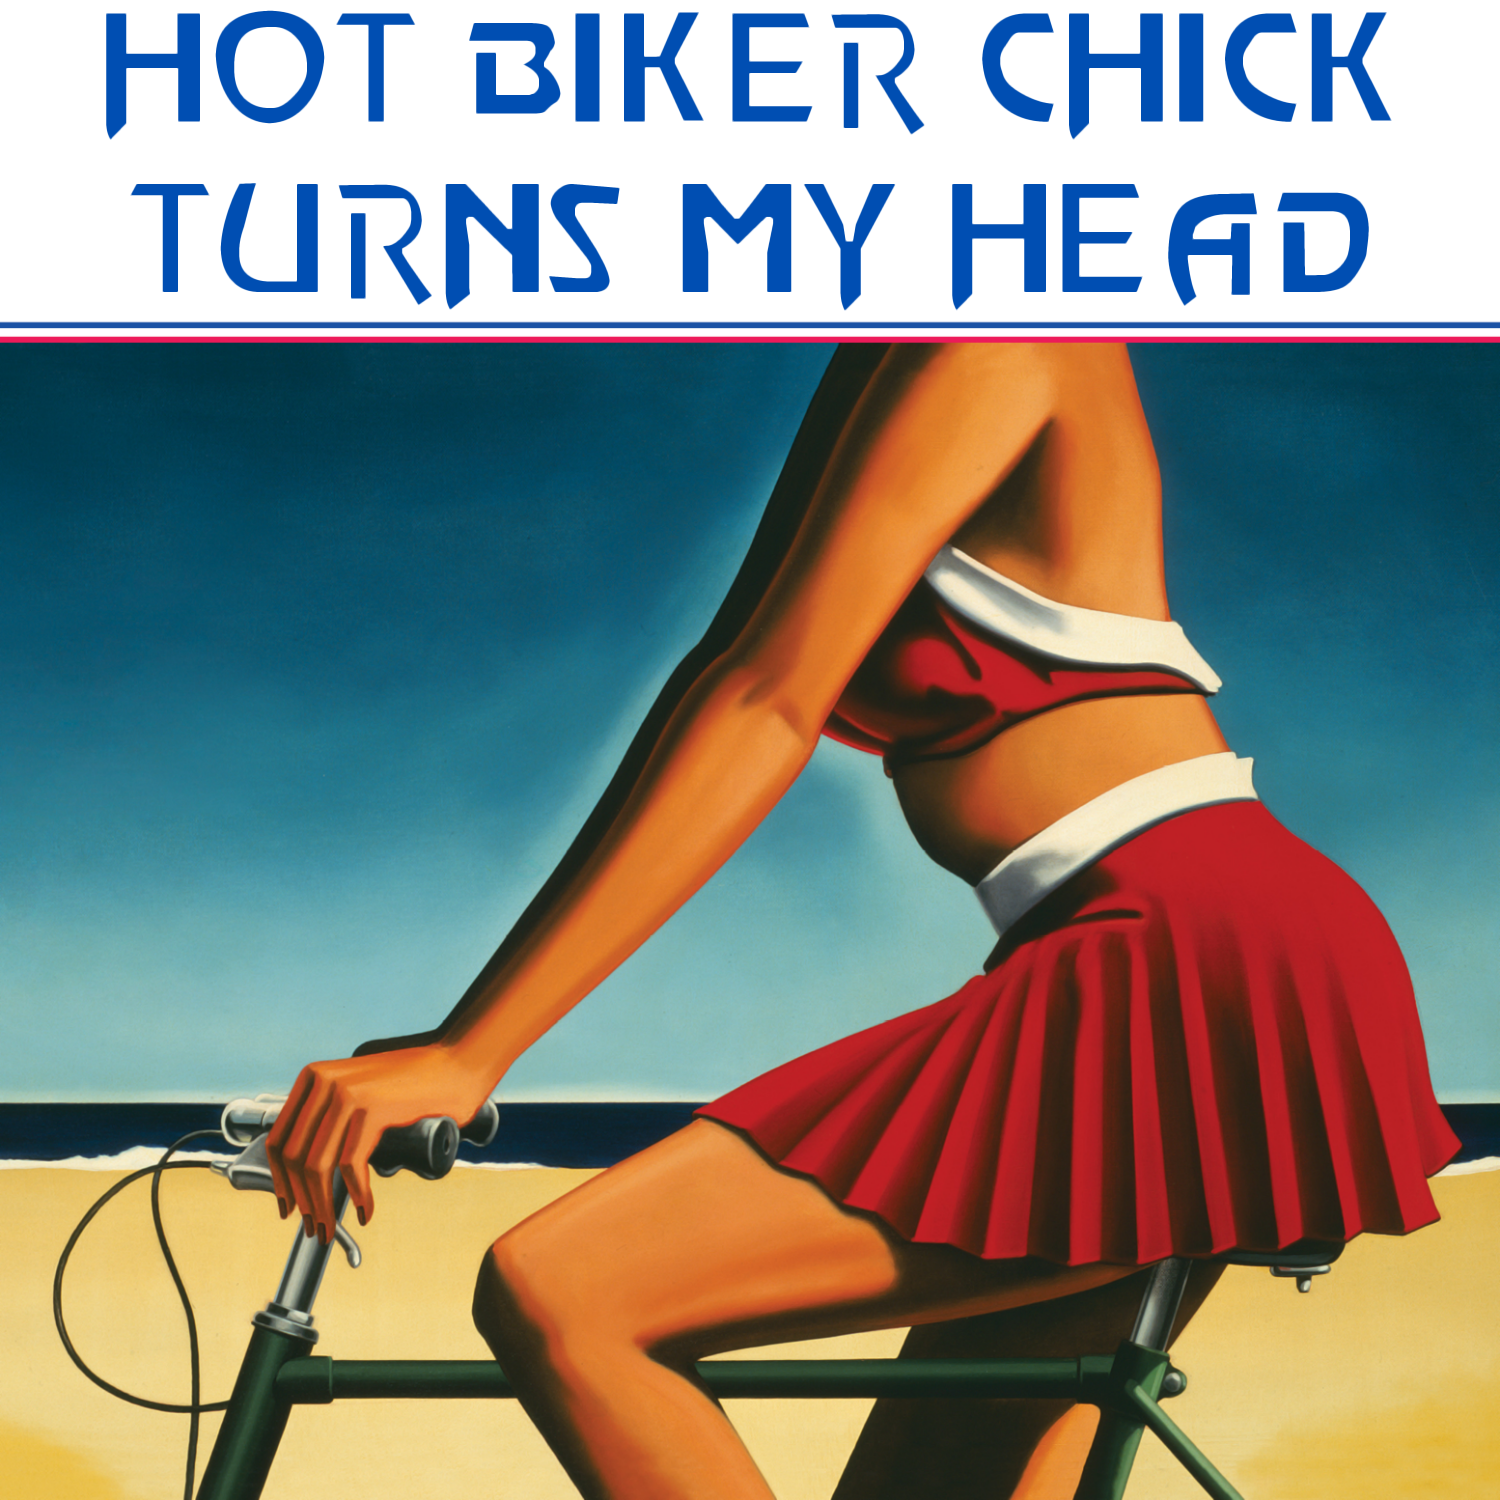 Album cover parody of Songs Cycled by Van Dyke Parks